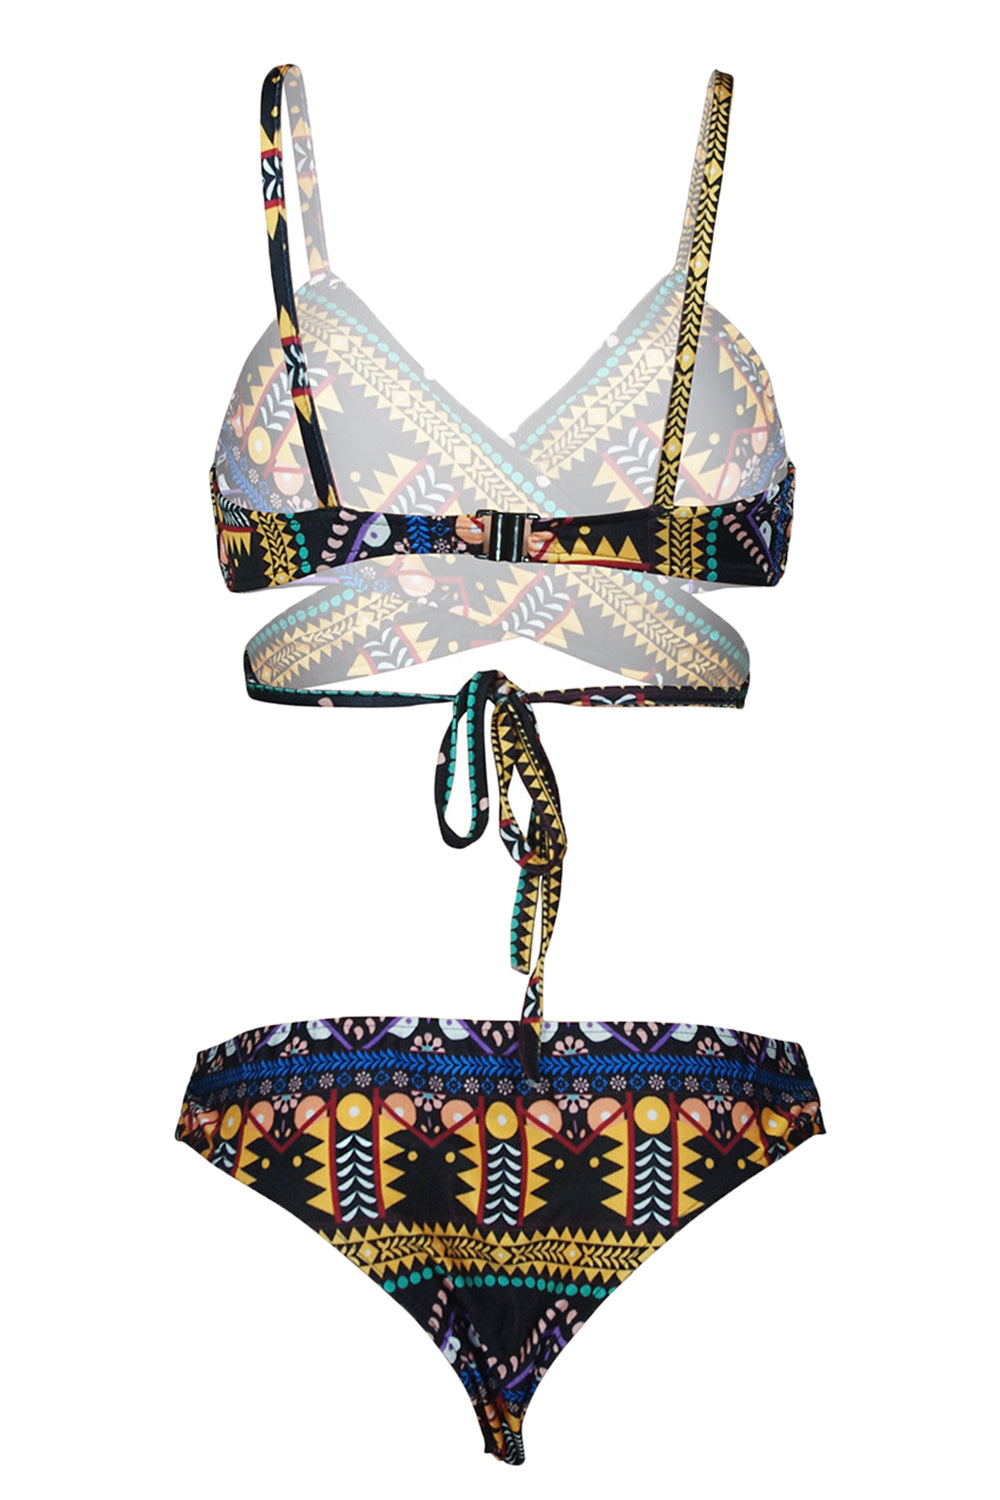 Iyasson Bohemia Print Front Cross Design Bikini Sets